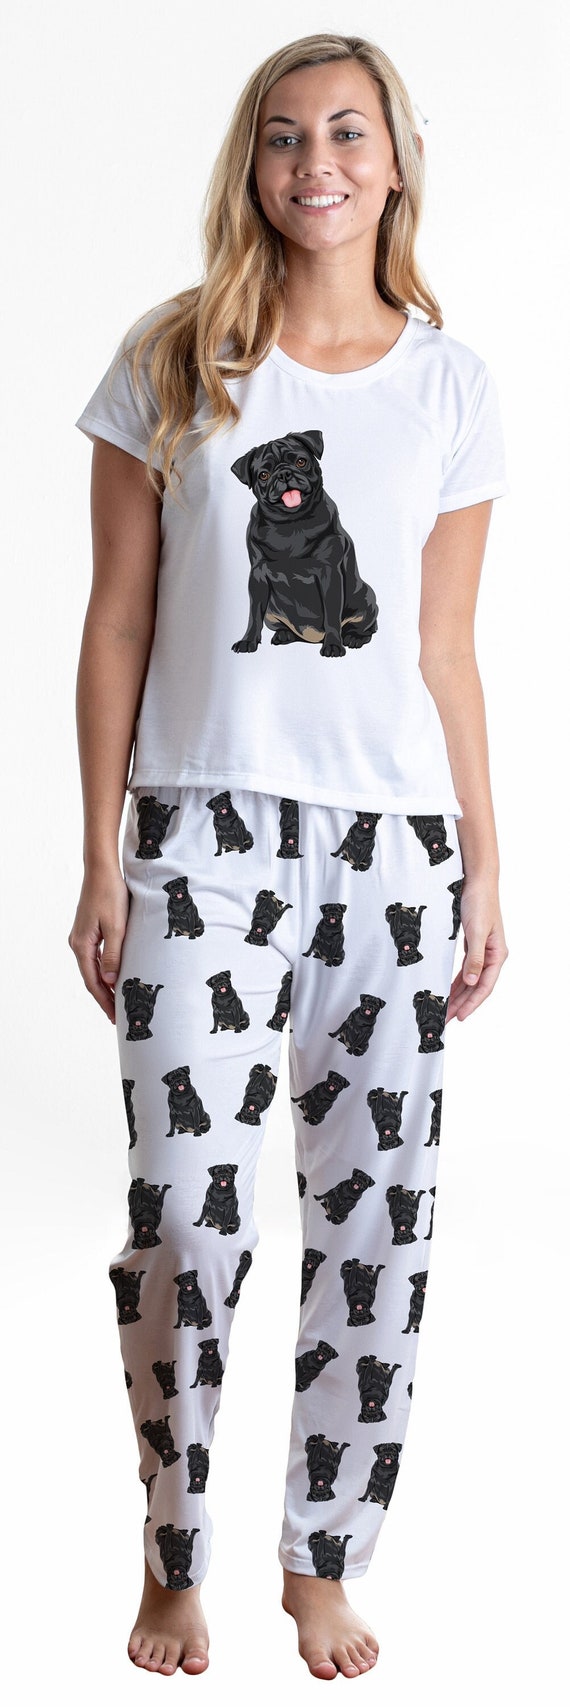 Black Pug Pajama Set With Pants for Women, Pug Lover Pj Set, Black